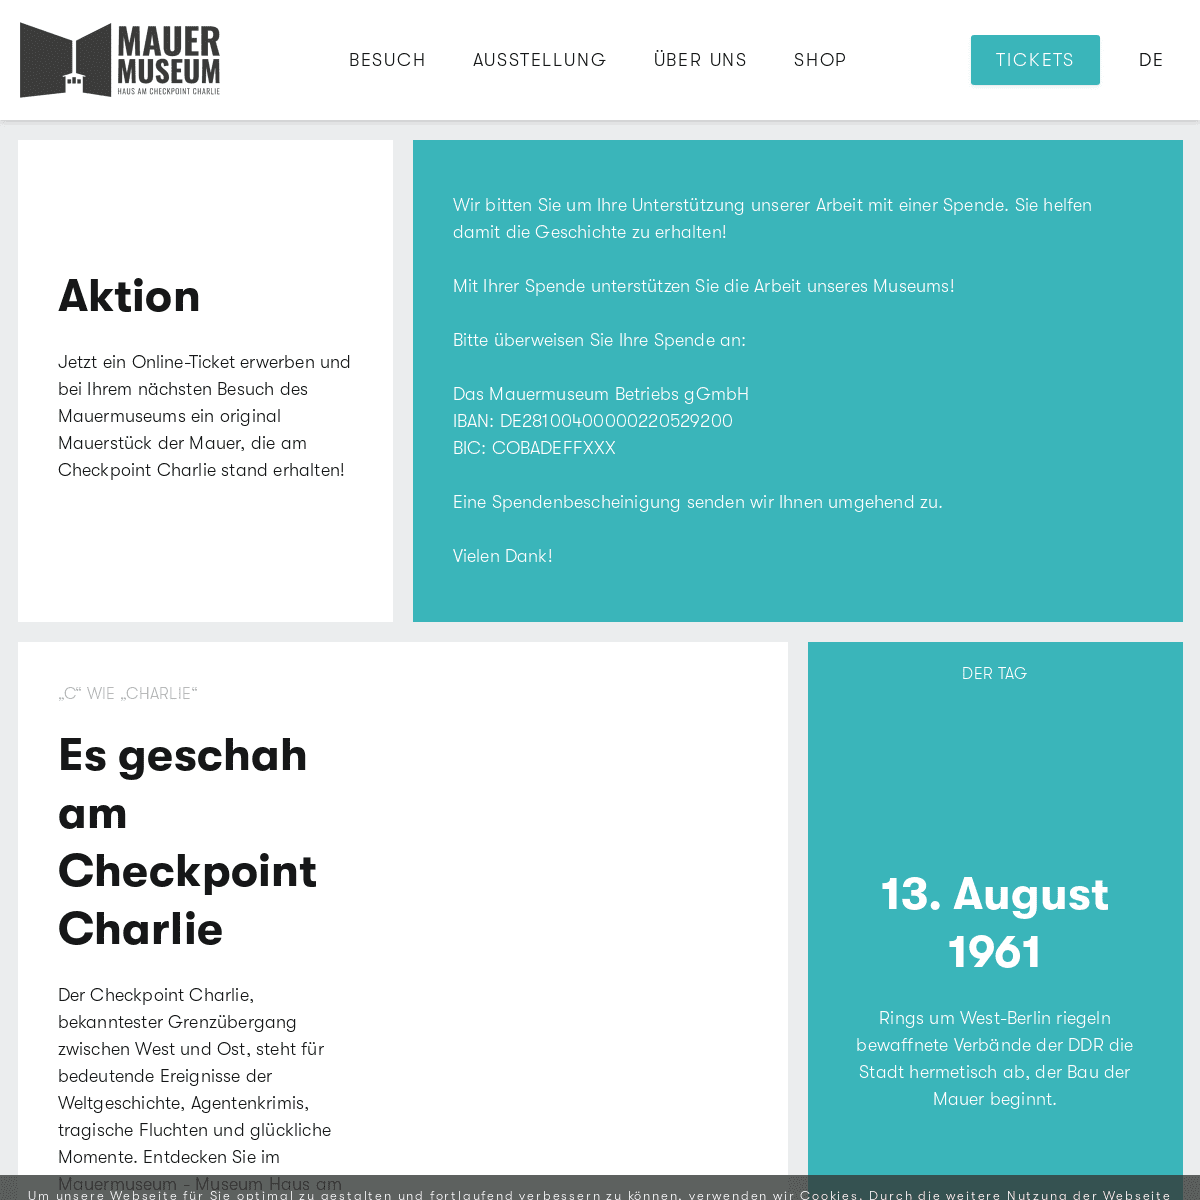 A complete backup of https://mauermuseum.de